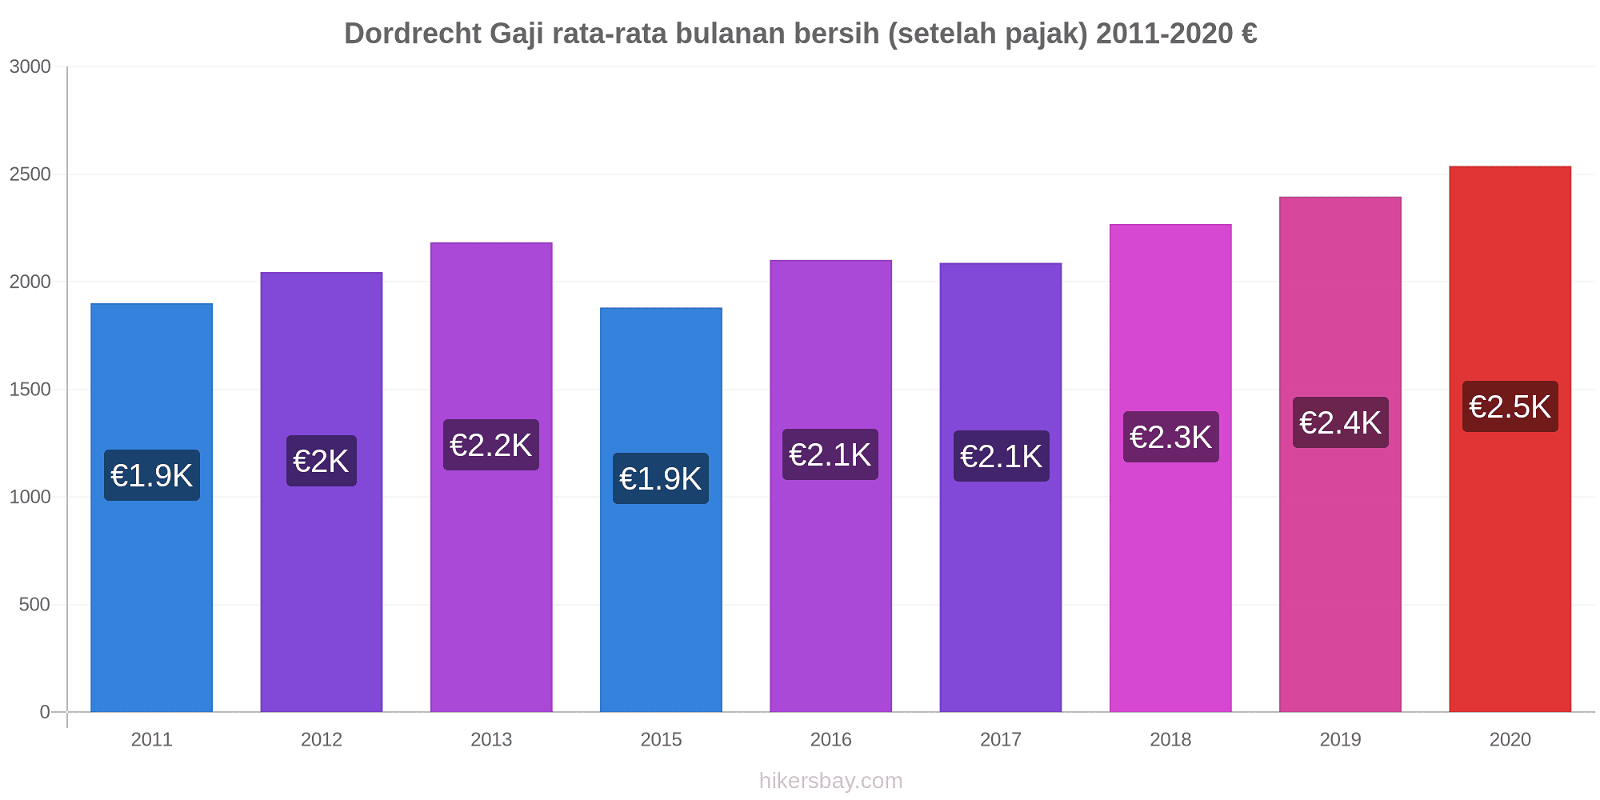 Dordrecht perubahan harga Gaji rata-rata bulanan bersih (setelah pajak) hikersbay.com